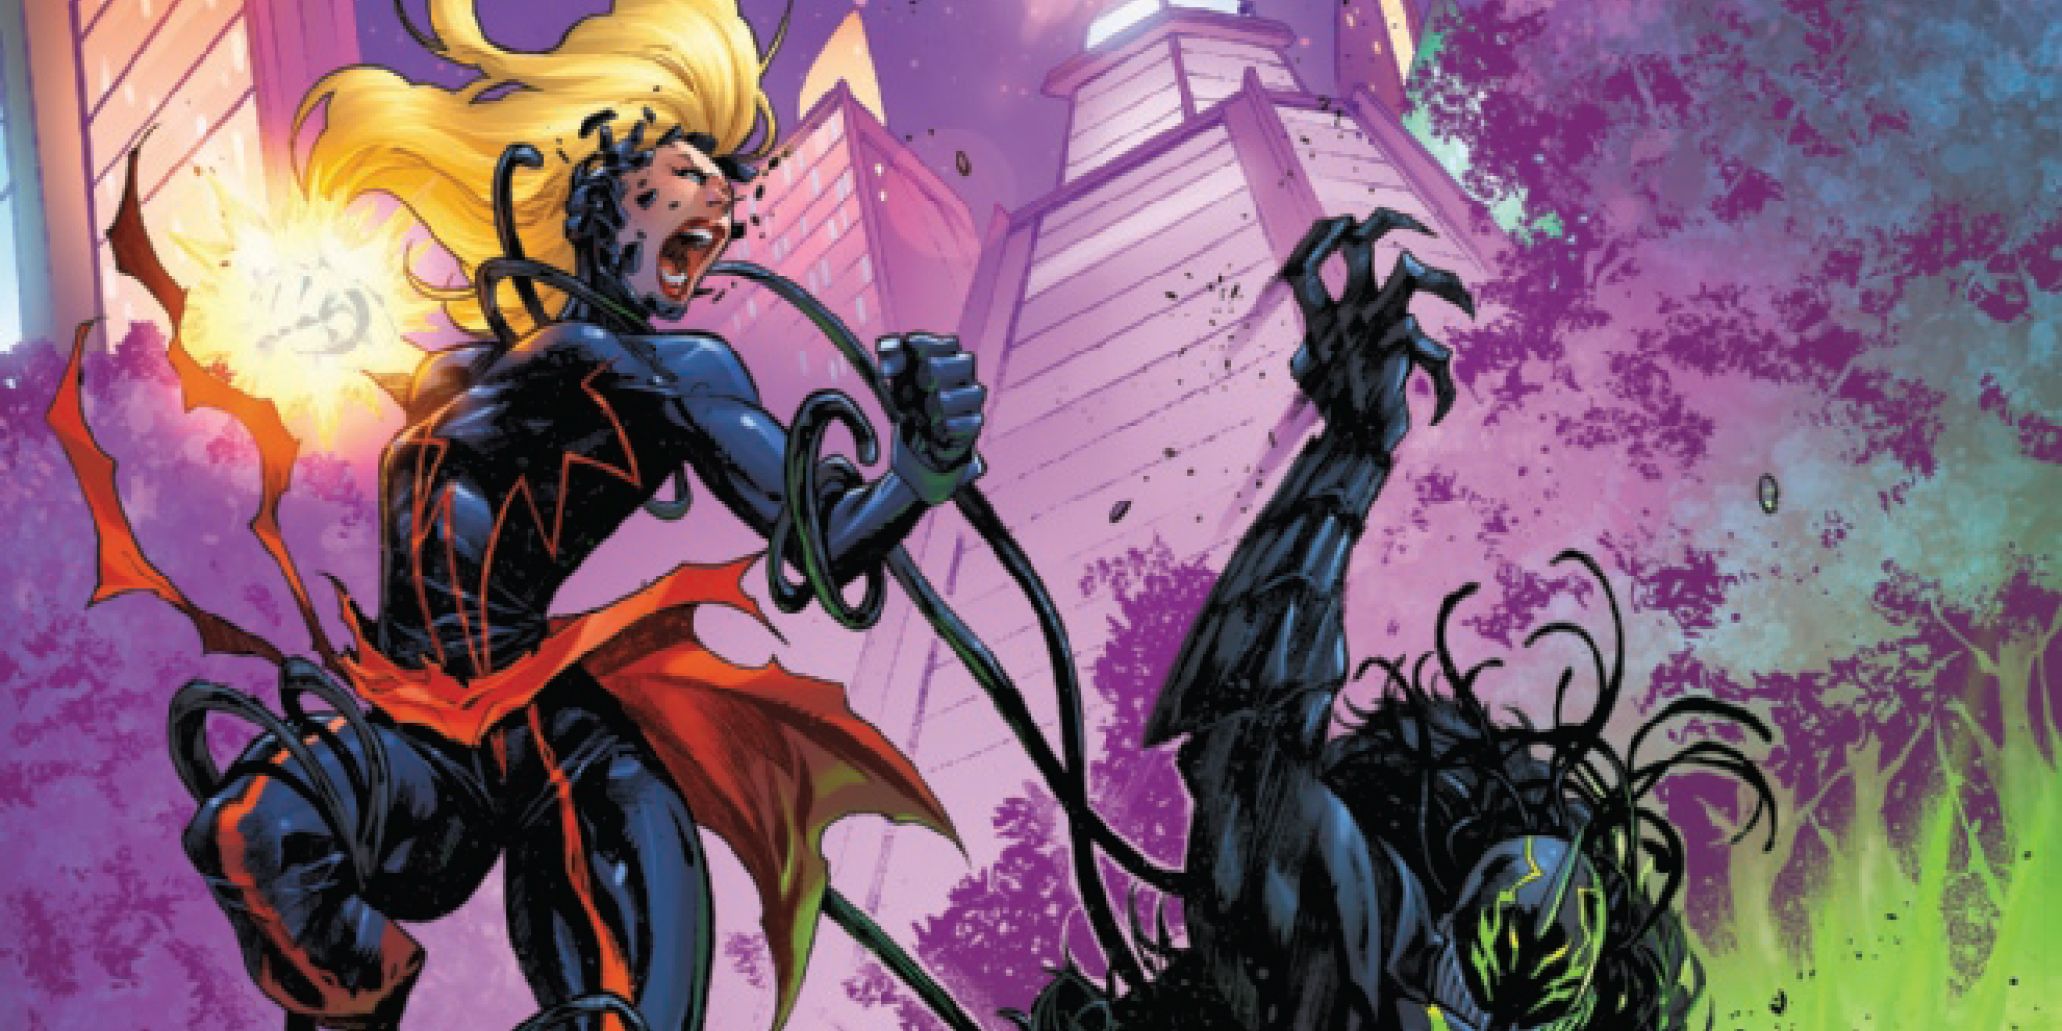 EXCLUSIVA: La Capitana Marvel desbloquea un nuevo e inesperado poder